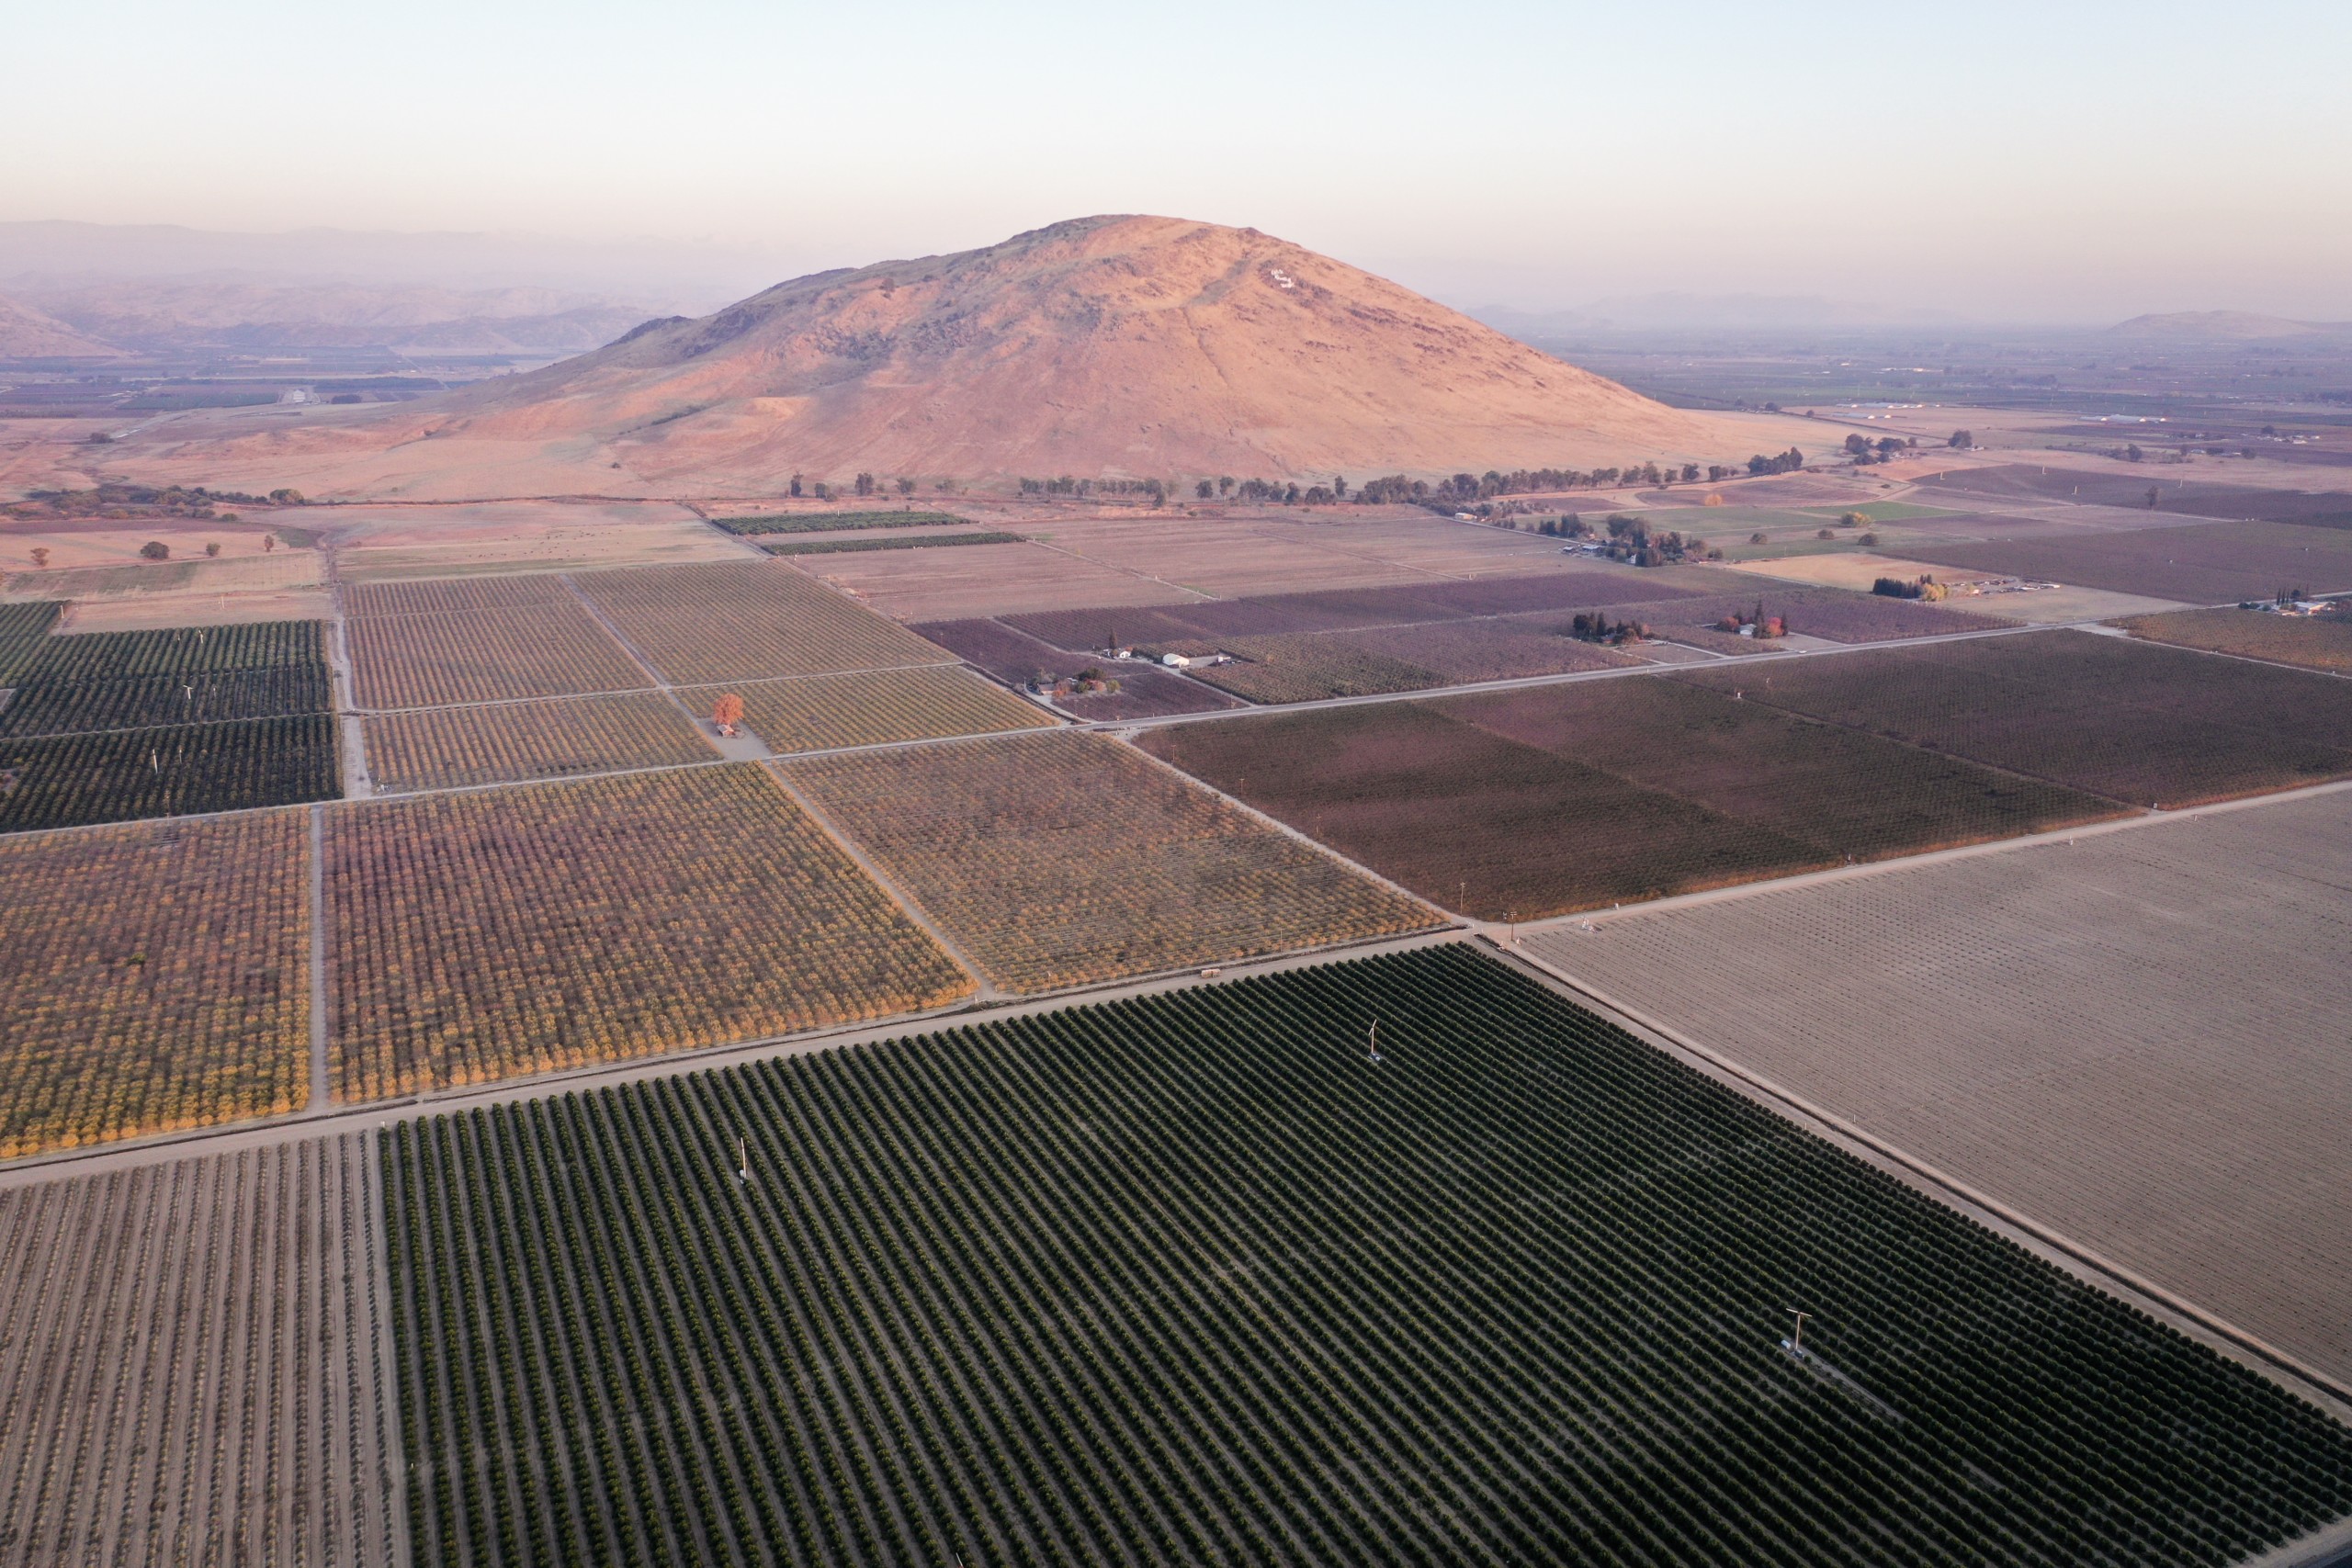 Aerial view of crop fields east of Fresno, California, looking east towards the Sierra Nevada foothills